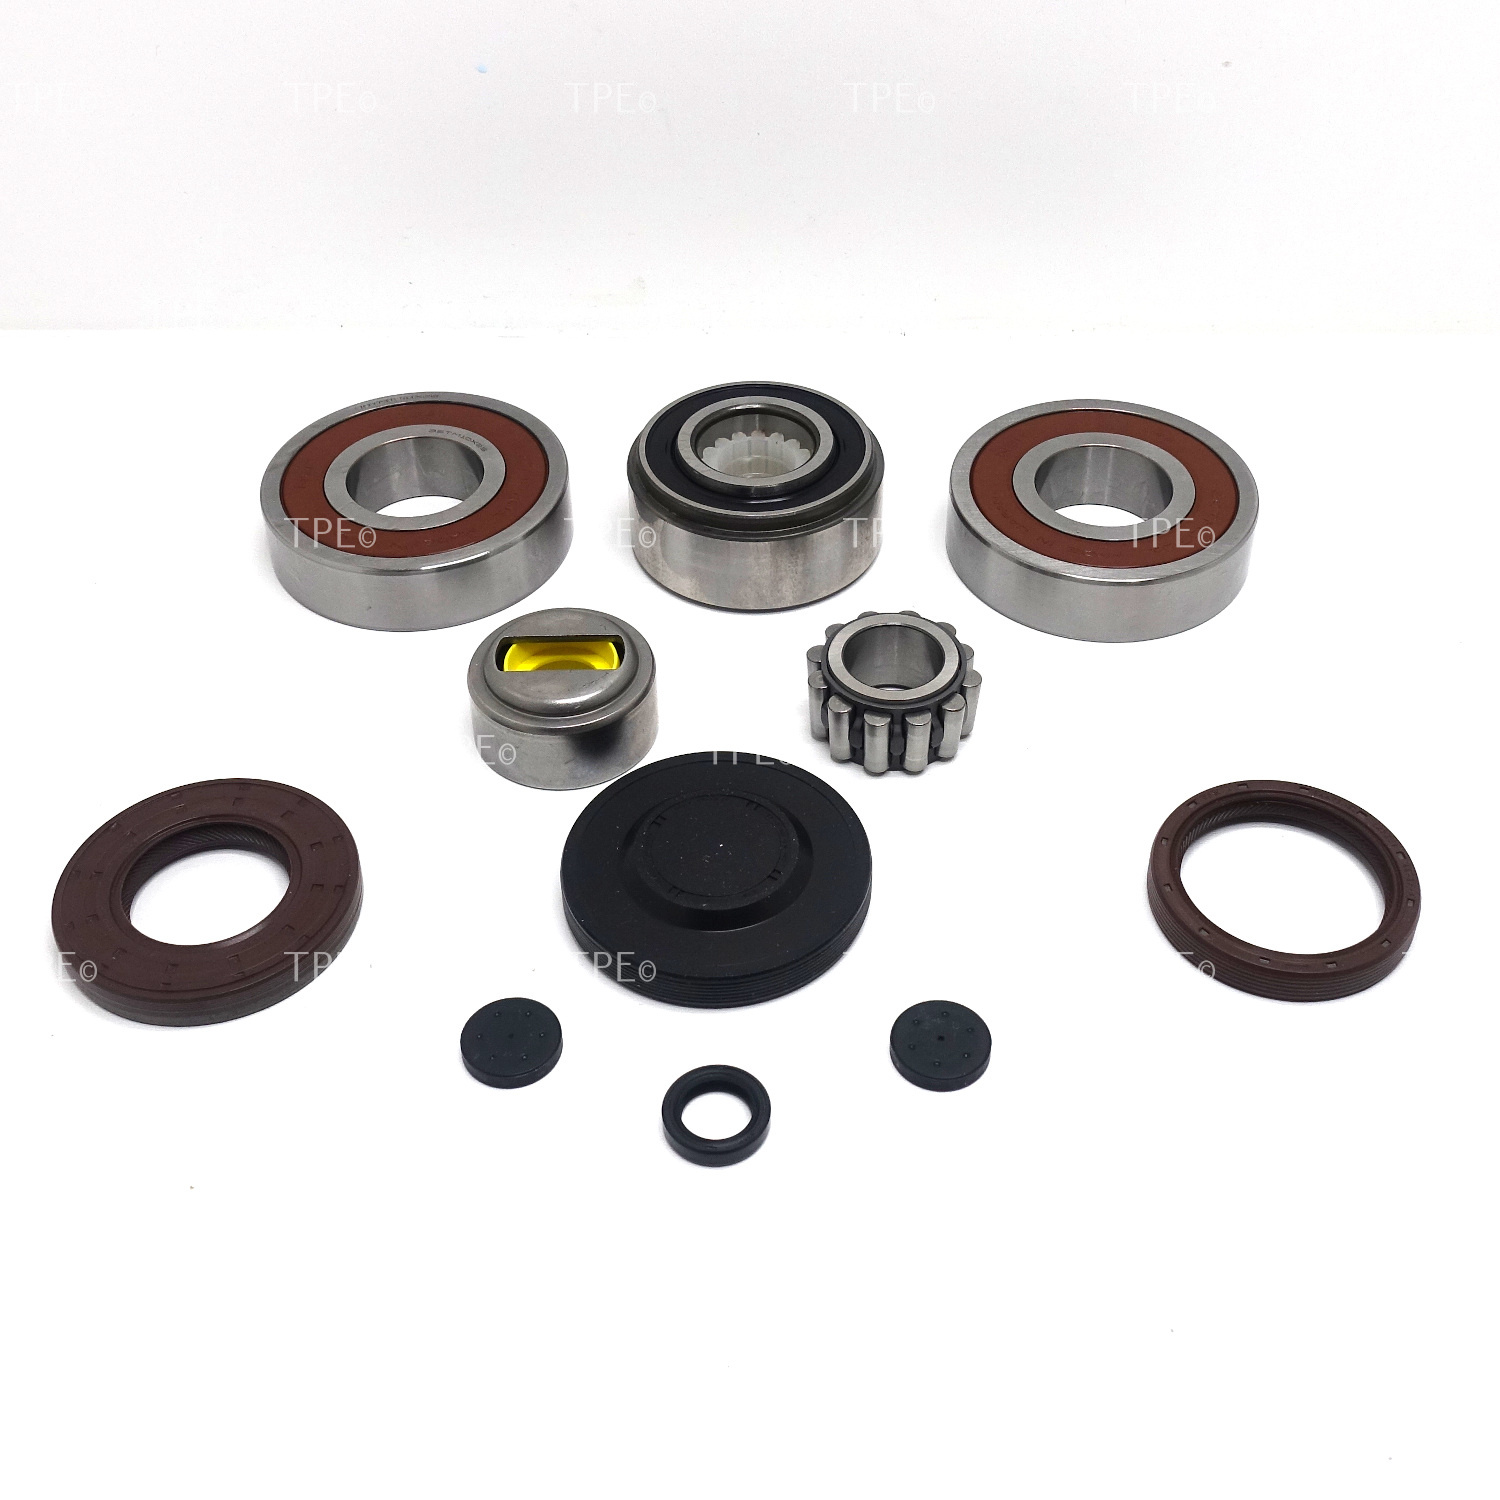 BMW.KB.14 This Bearing & Seal Kit contains the following Parts:

• 6 Bearings
• 3 Seals
• 2 Caps